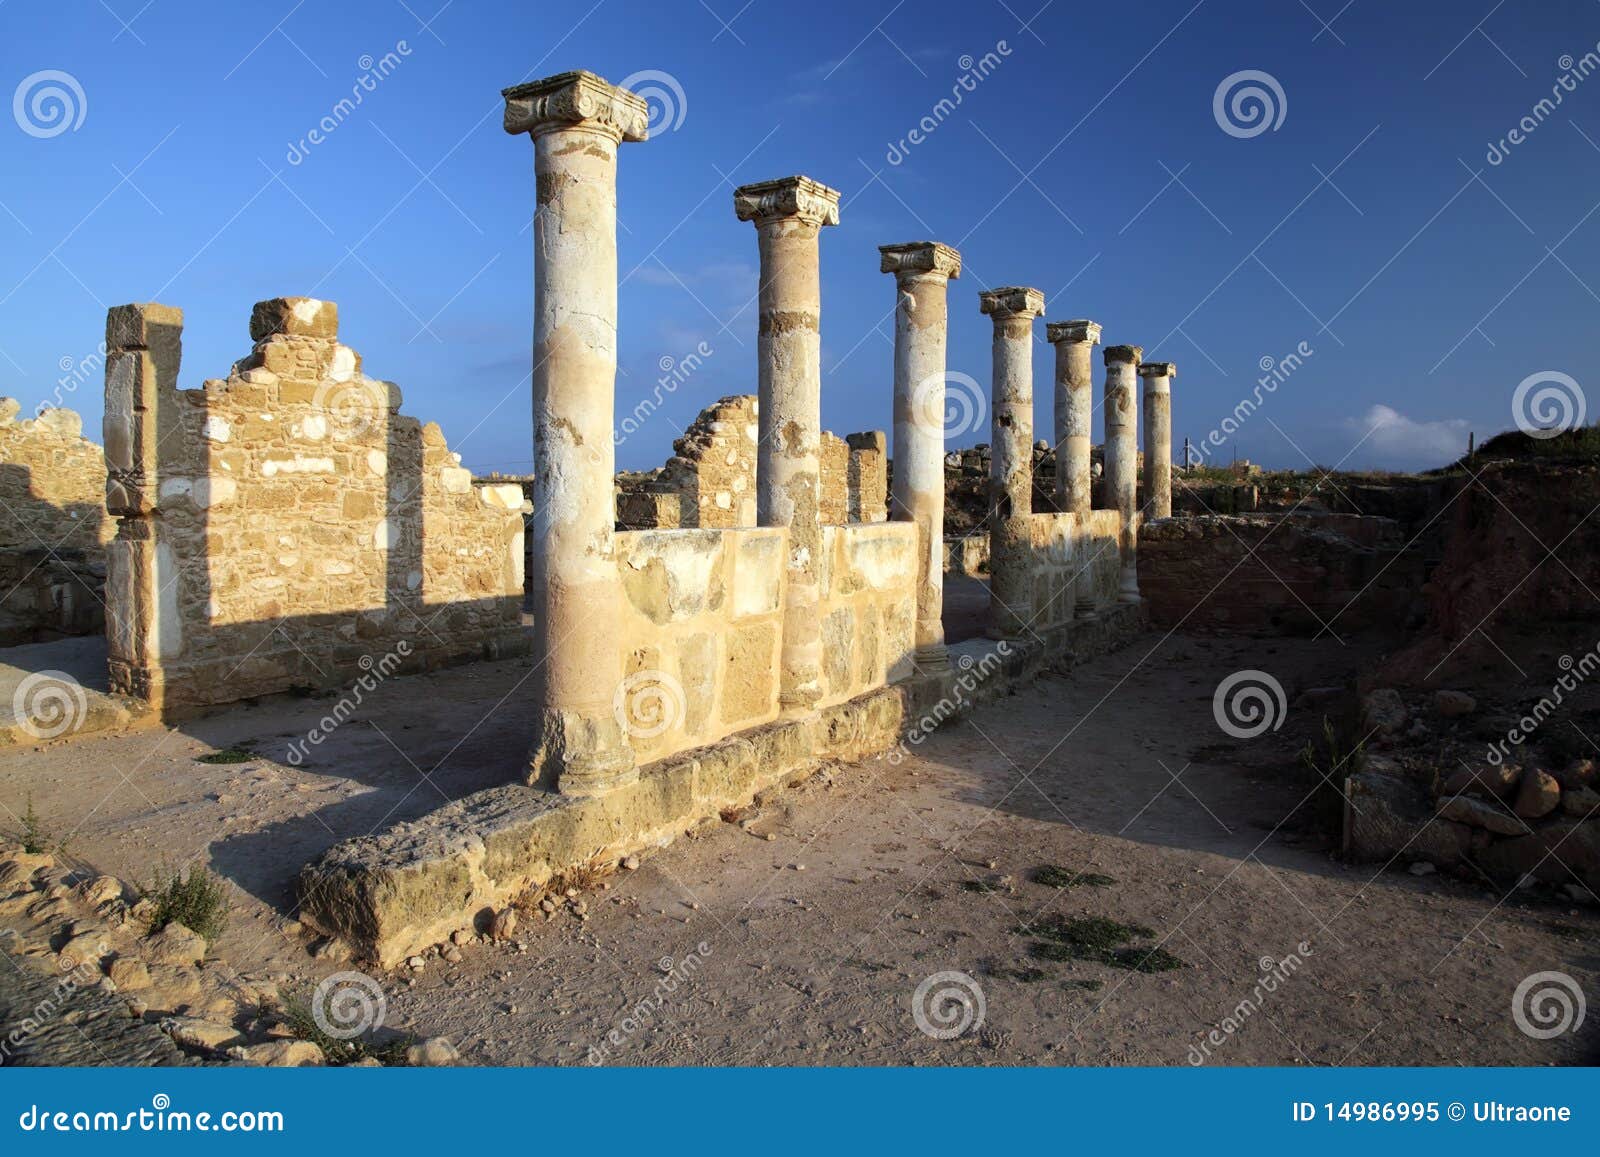 temple columns at paphos, cyprus.